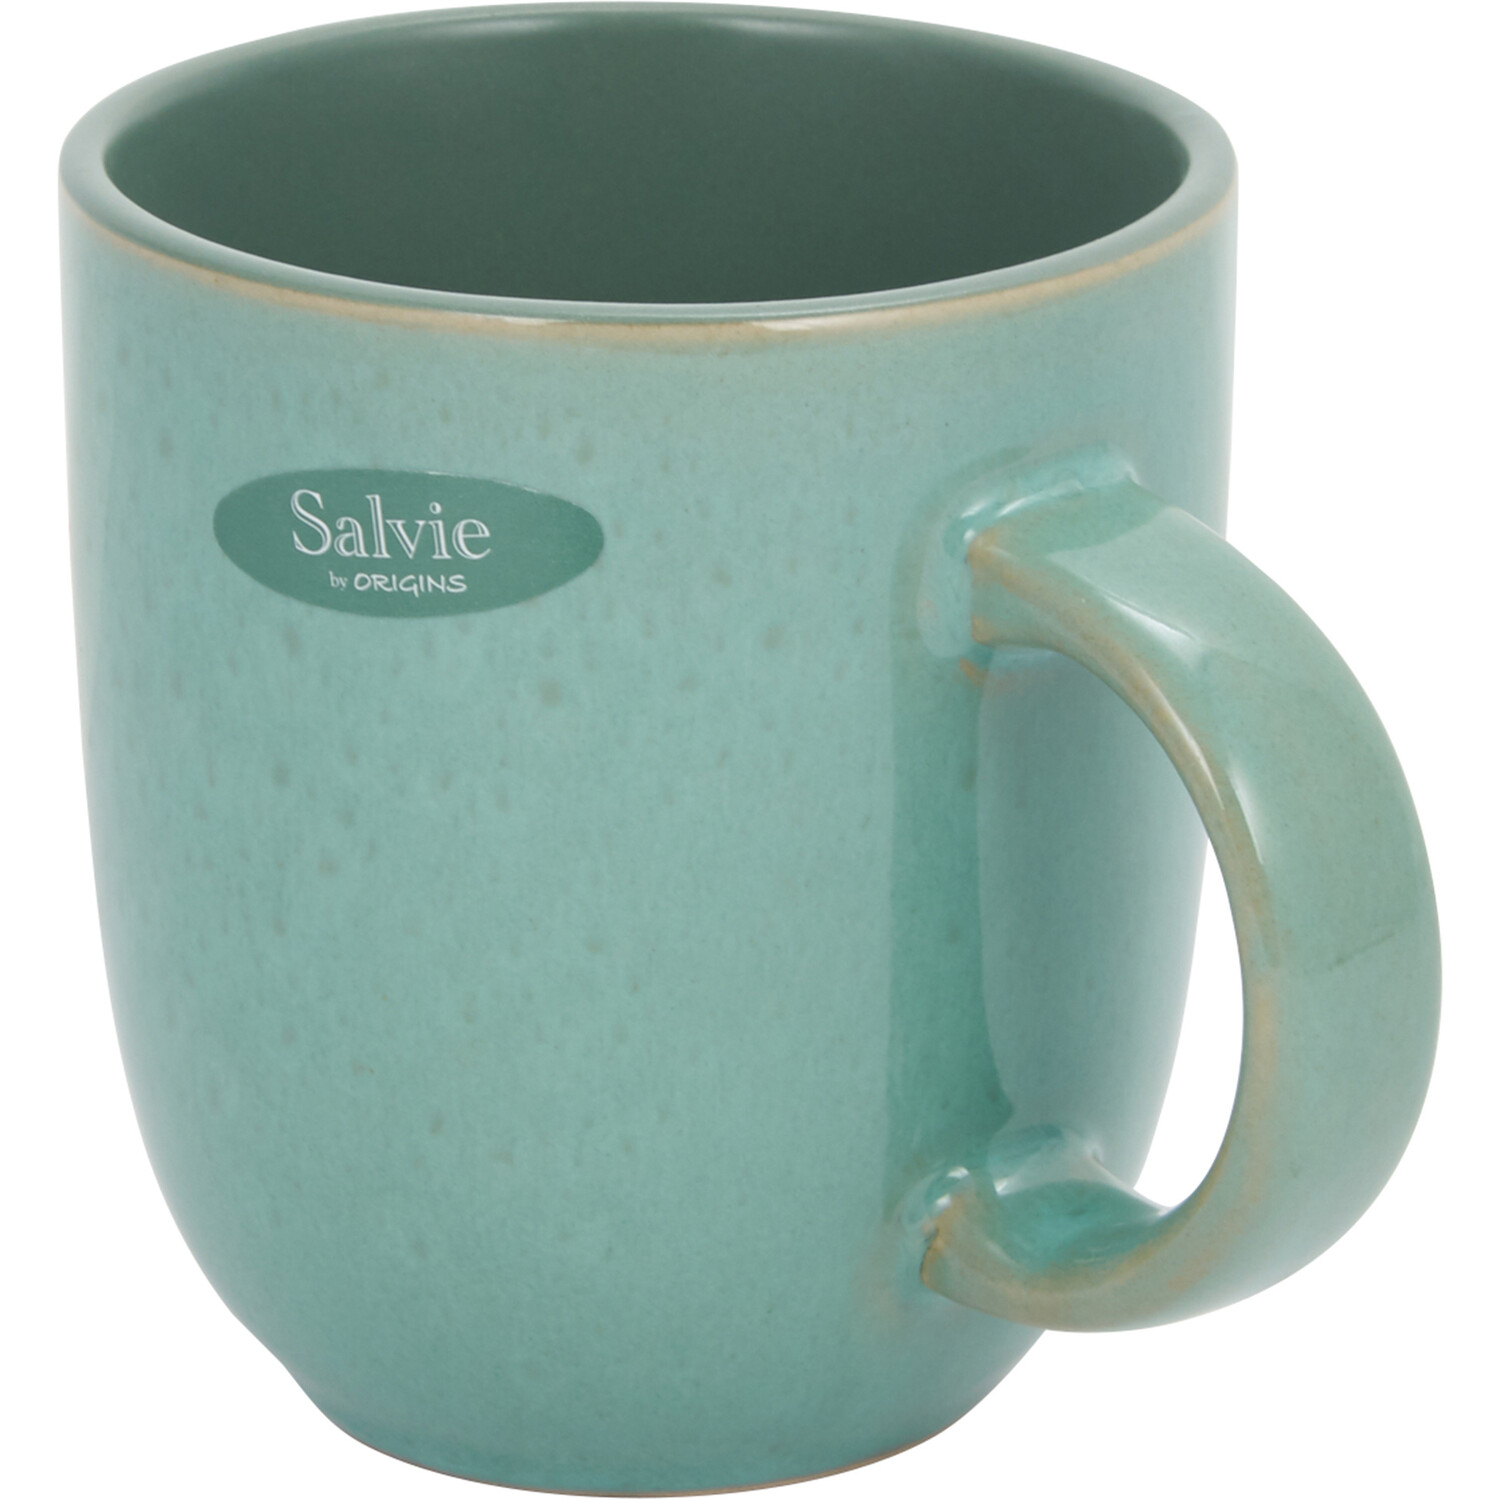 Salvie Reactive Glaze Bullet Mug - Green Image 2